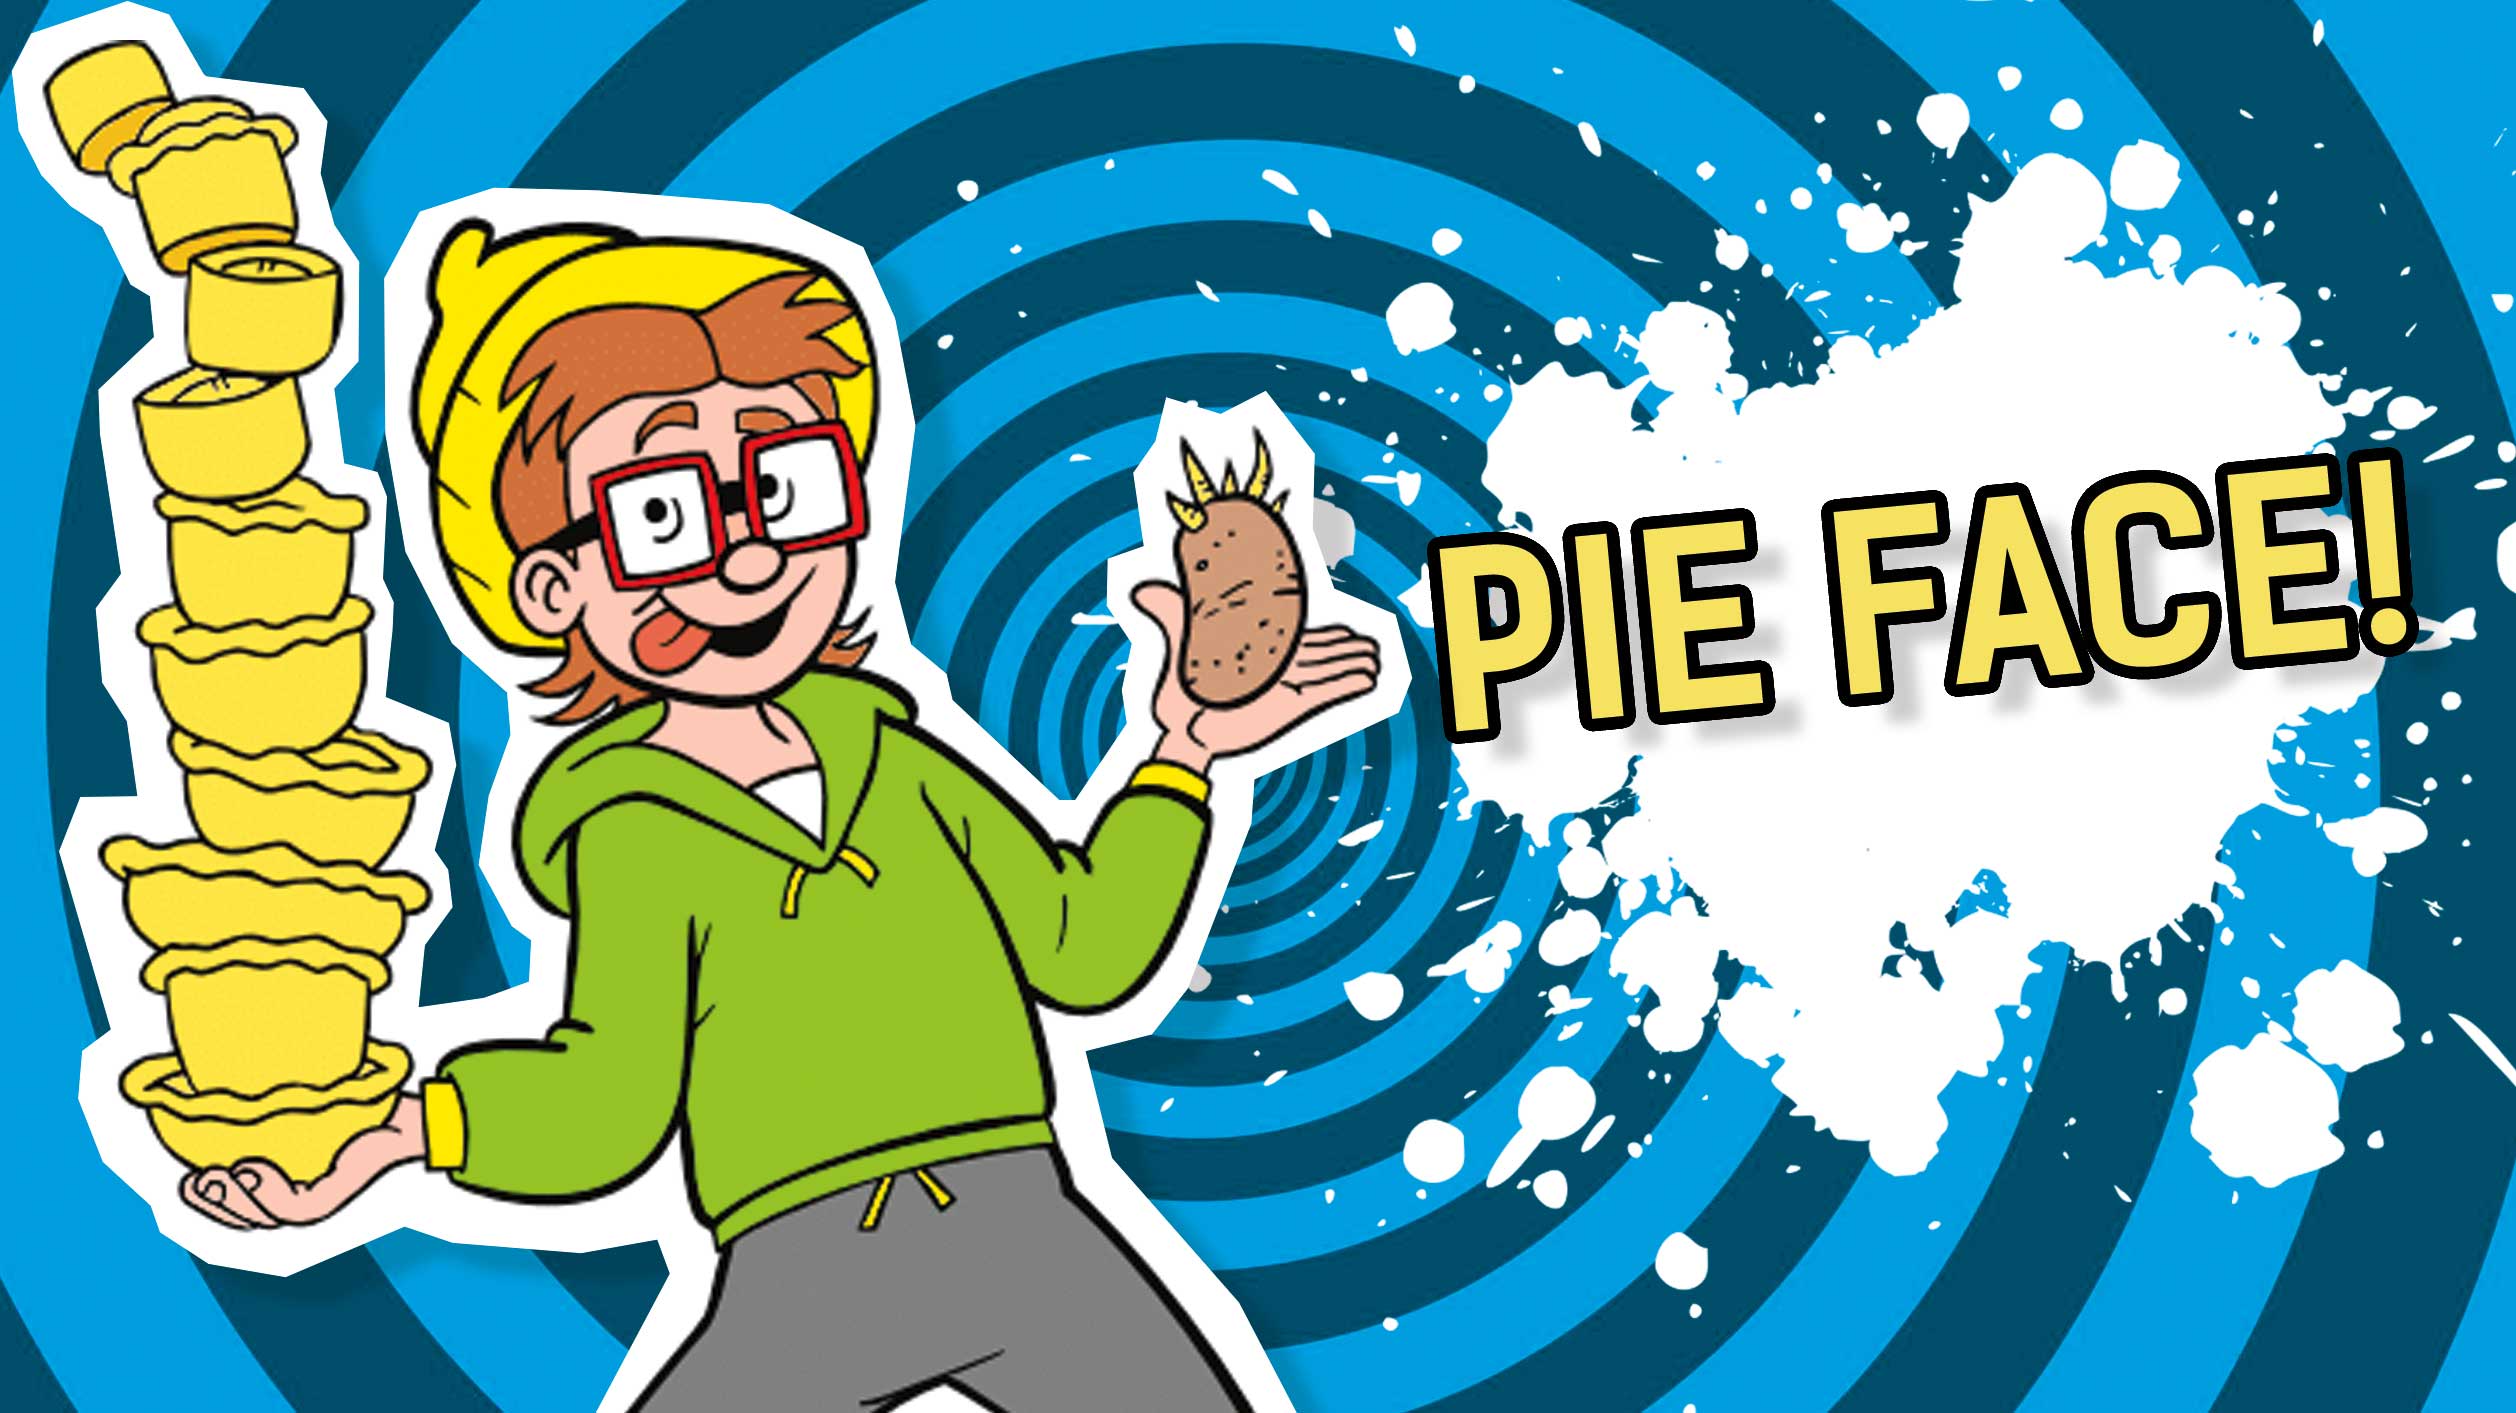 Result: Pie Face